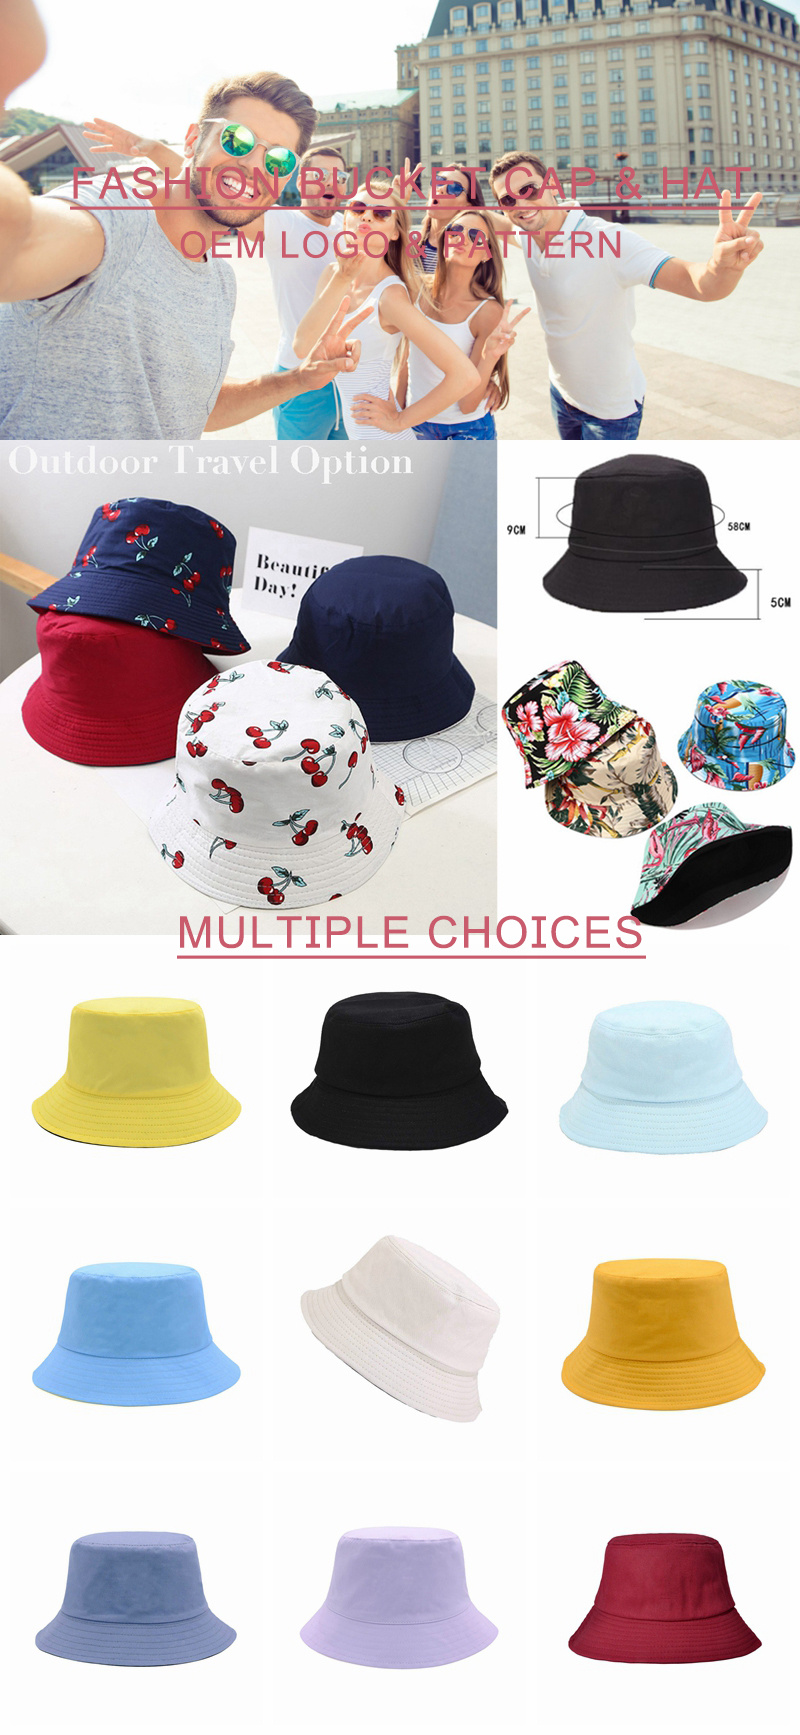 Manufacturer Bulk Stock Wholesale 100% Cotton Fisherman Cap Bucket Hats